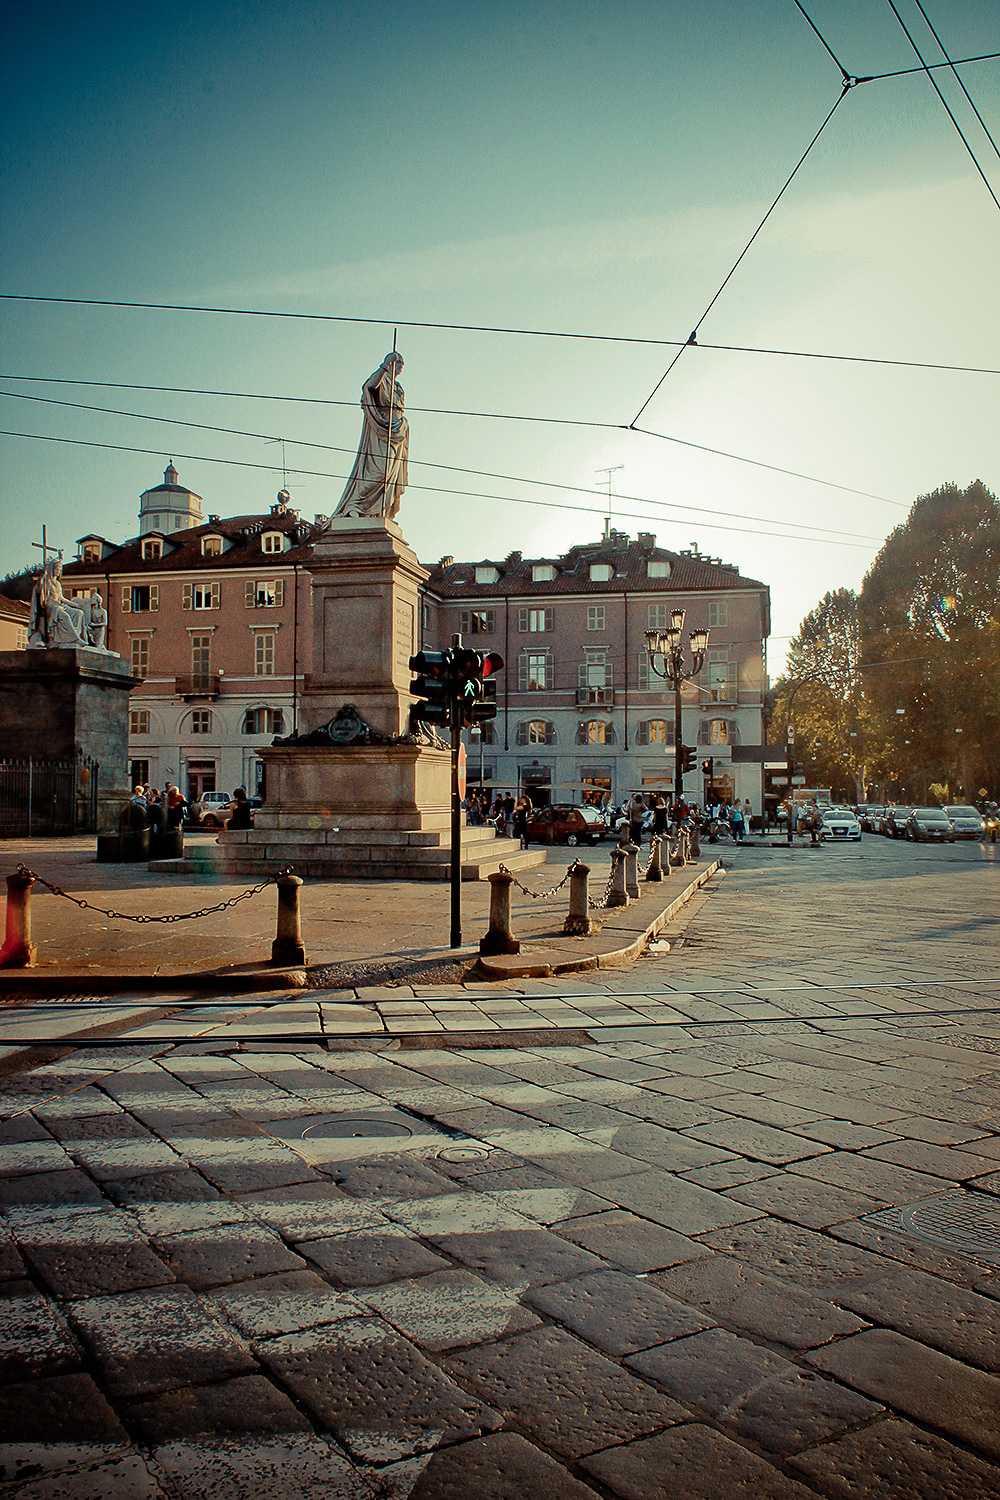 A Day In Torino - Statue in front of "La Gran Madre"